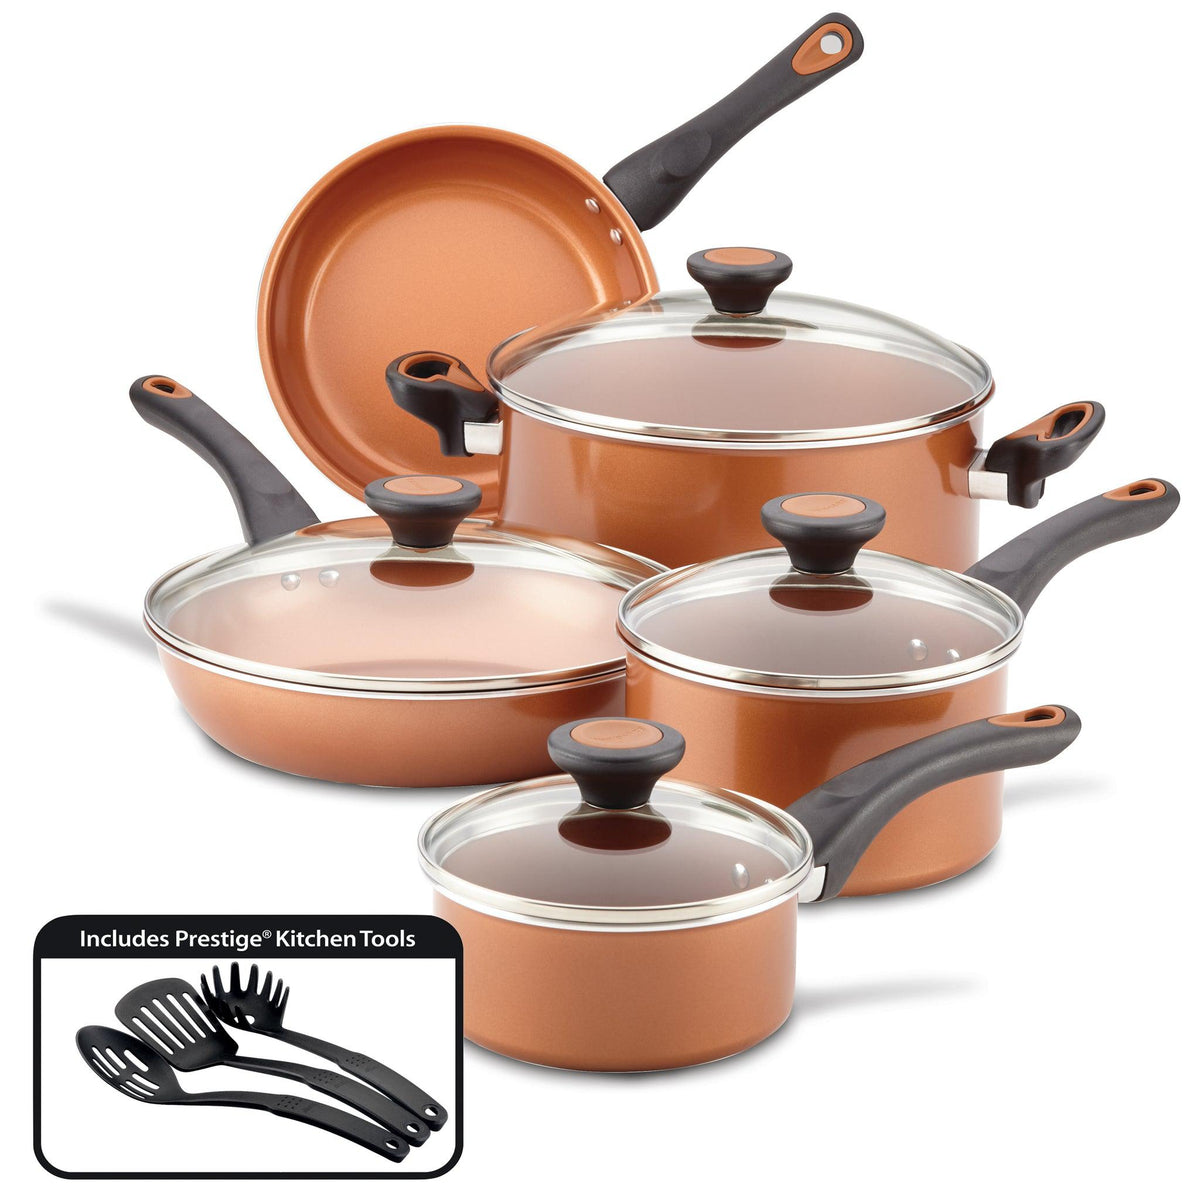 Farberware Copper Aluminum 15-Piece Cookware Set